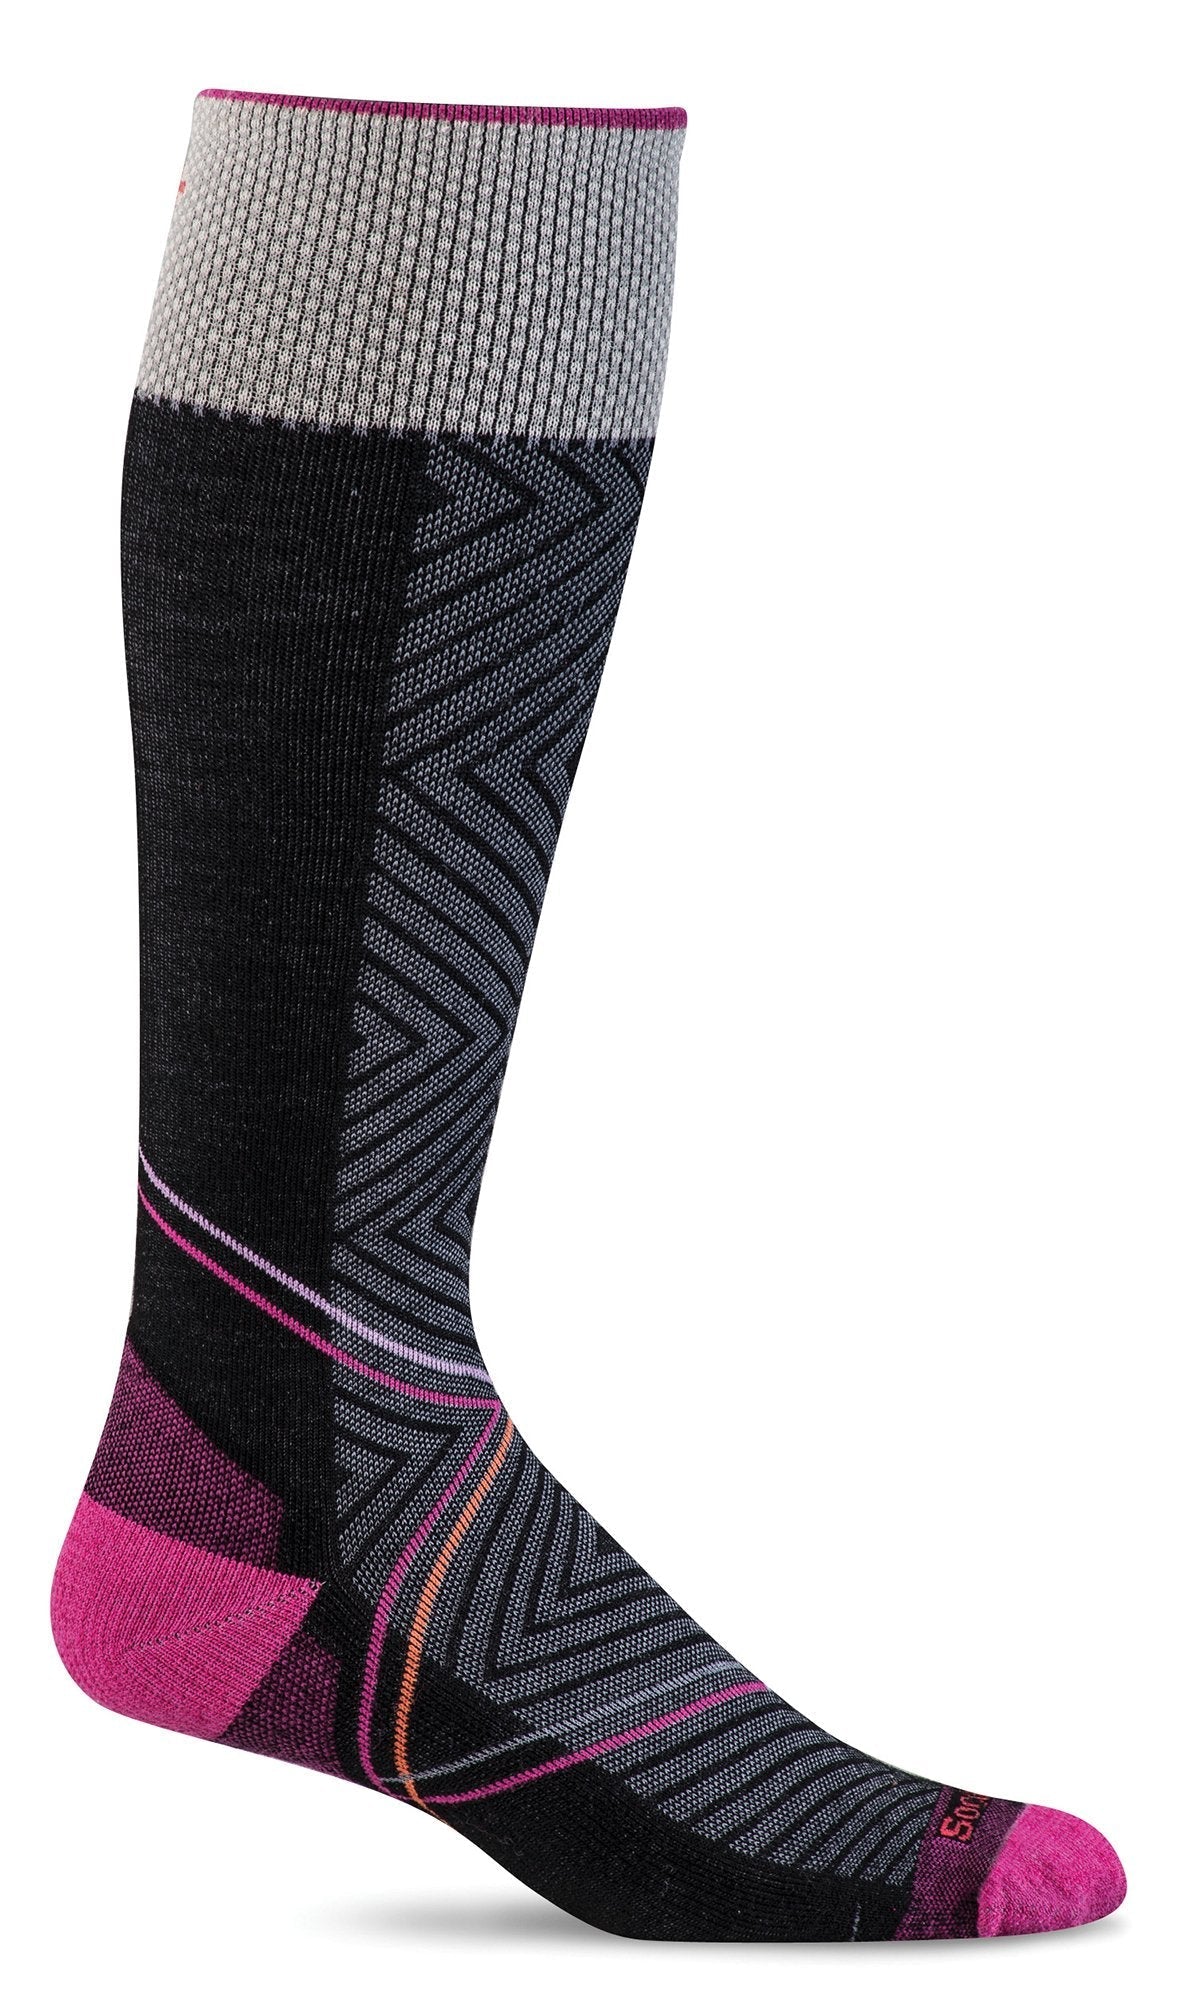 Latest News - Pebble UK » graduated compression support socks